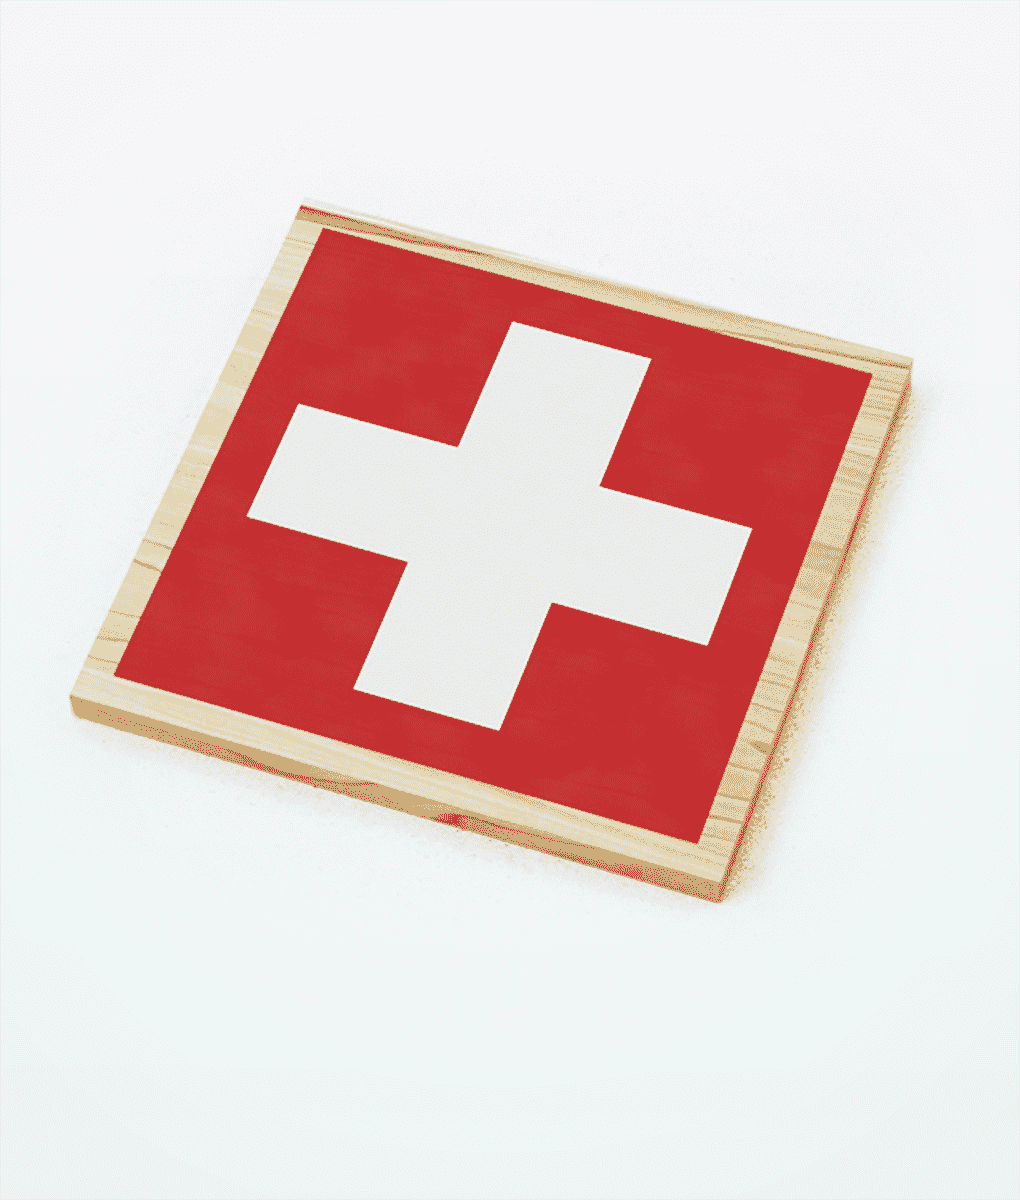 Varsy’s Swiss Cross Wooden Magnet